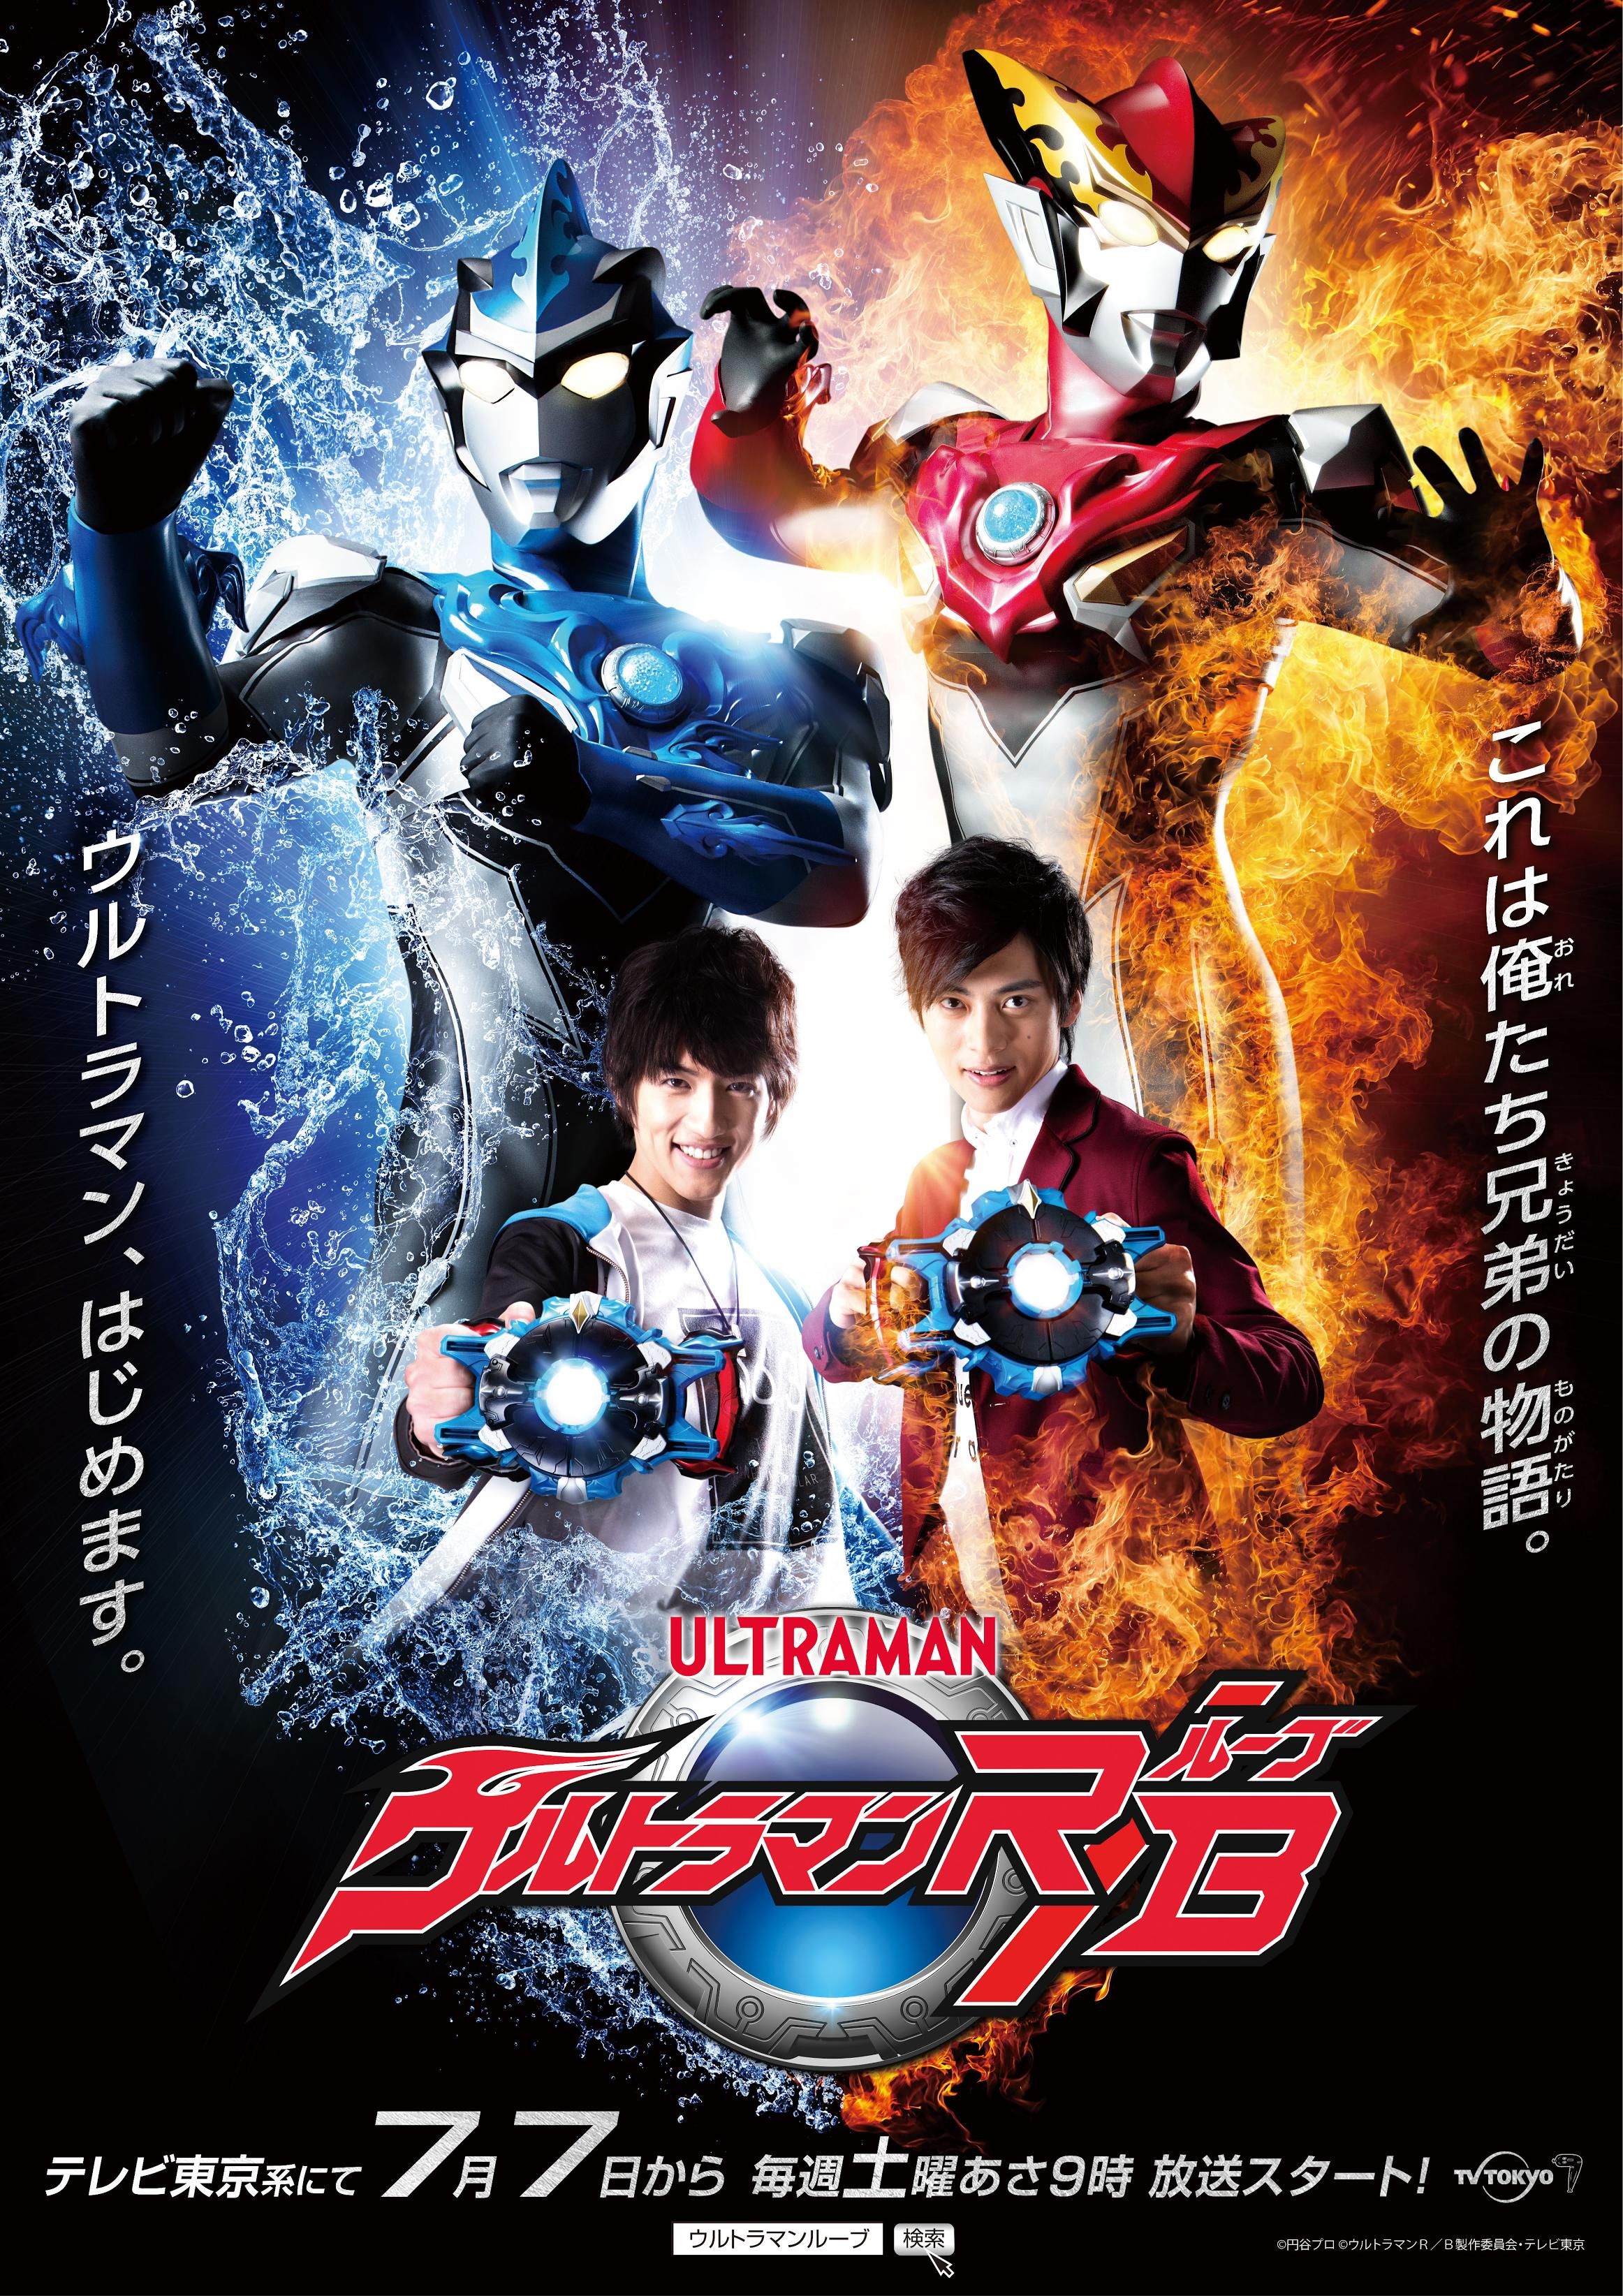 New TV Series “Ultraman R B(Ruebe)” -First Series Starring